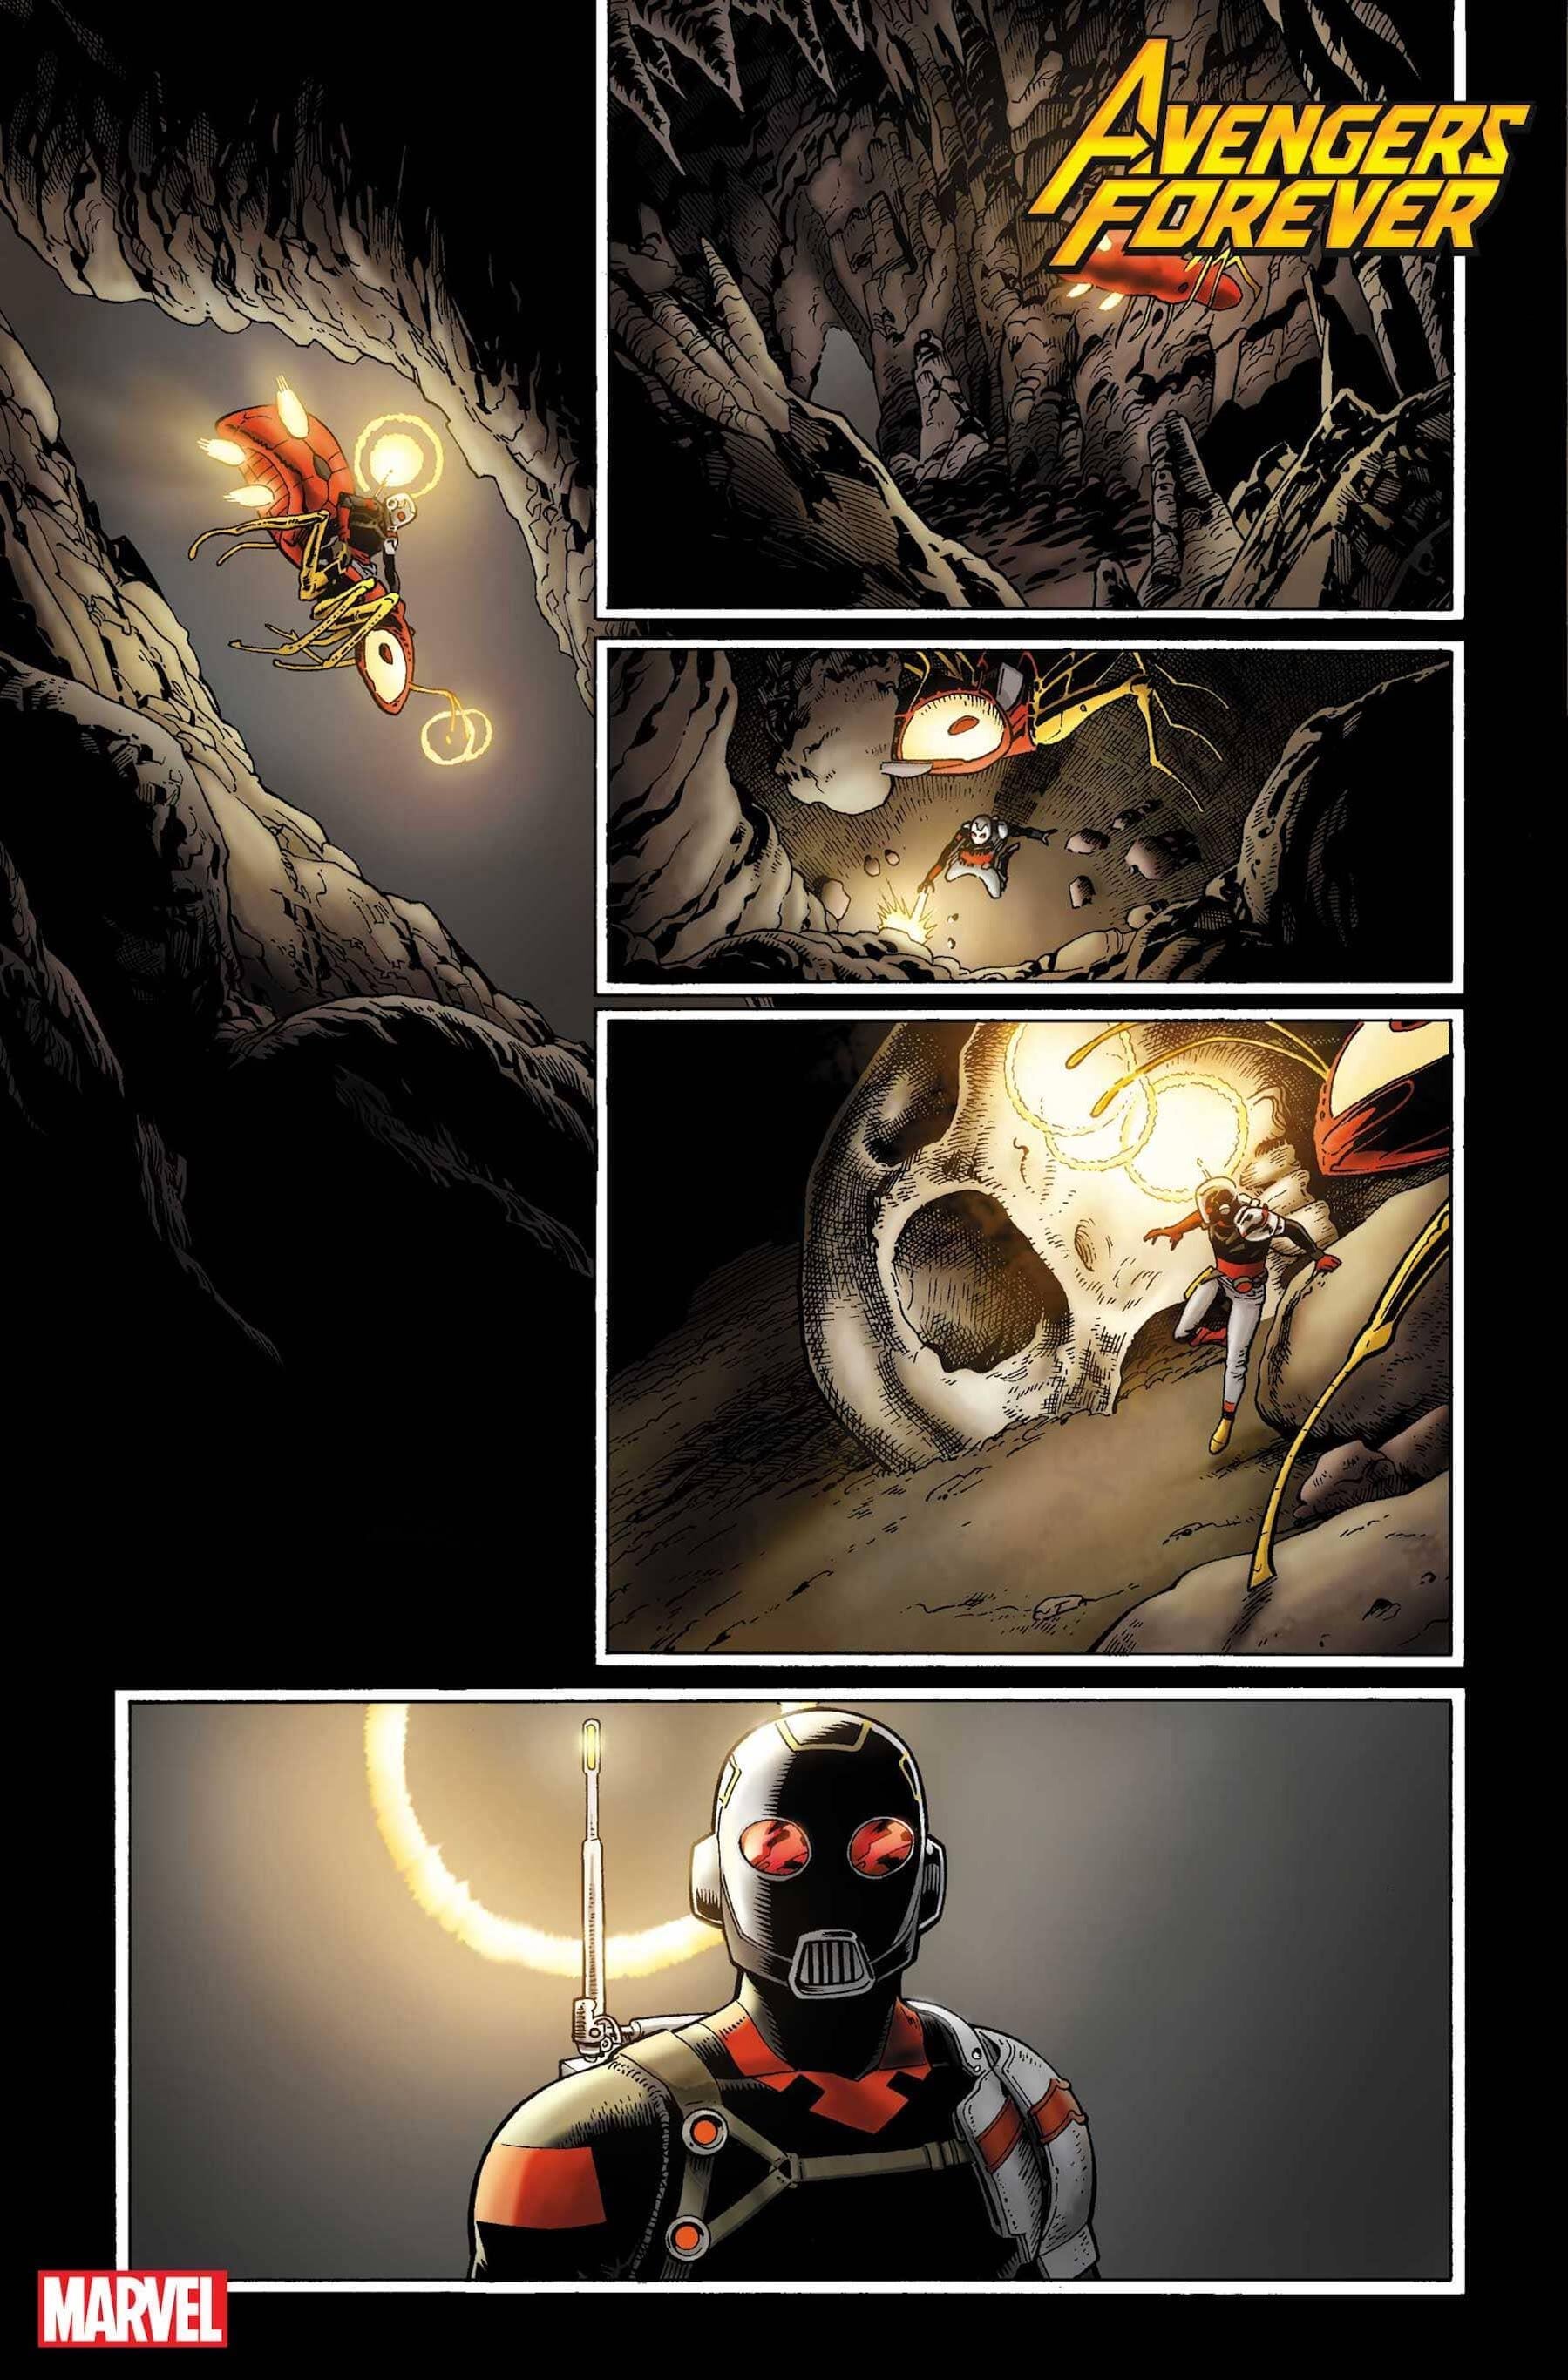 avengers-forever-1-preview-page-2-tony-stark-ant-man.jpg